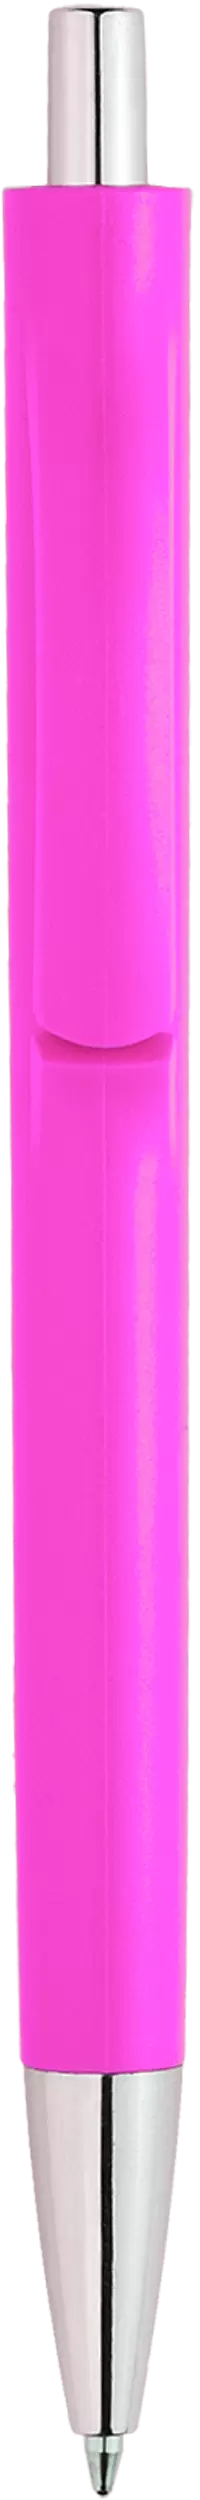 Ручка IGLA CHROME Розовая 1032-10